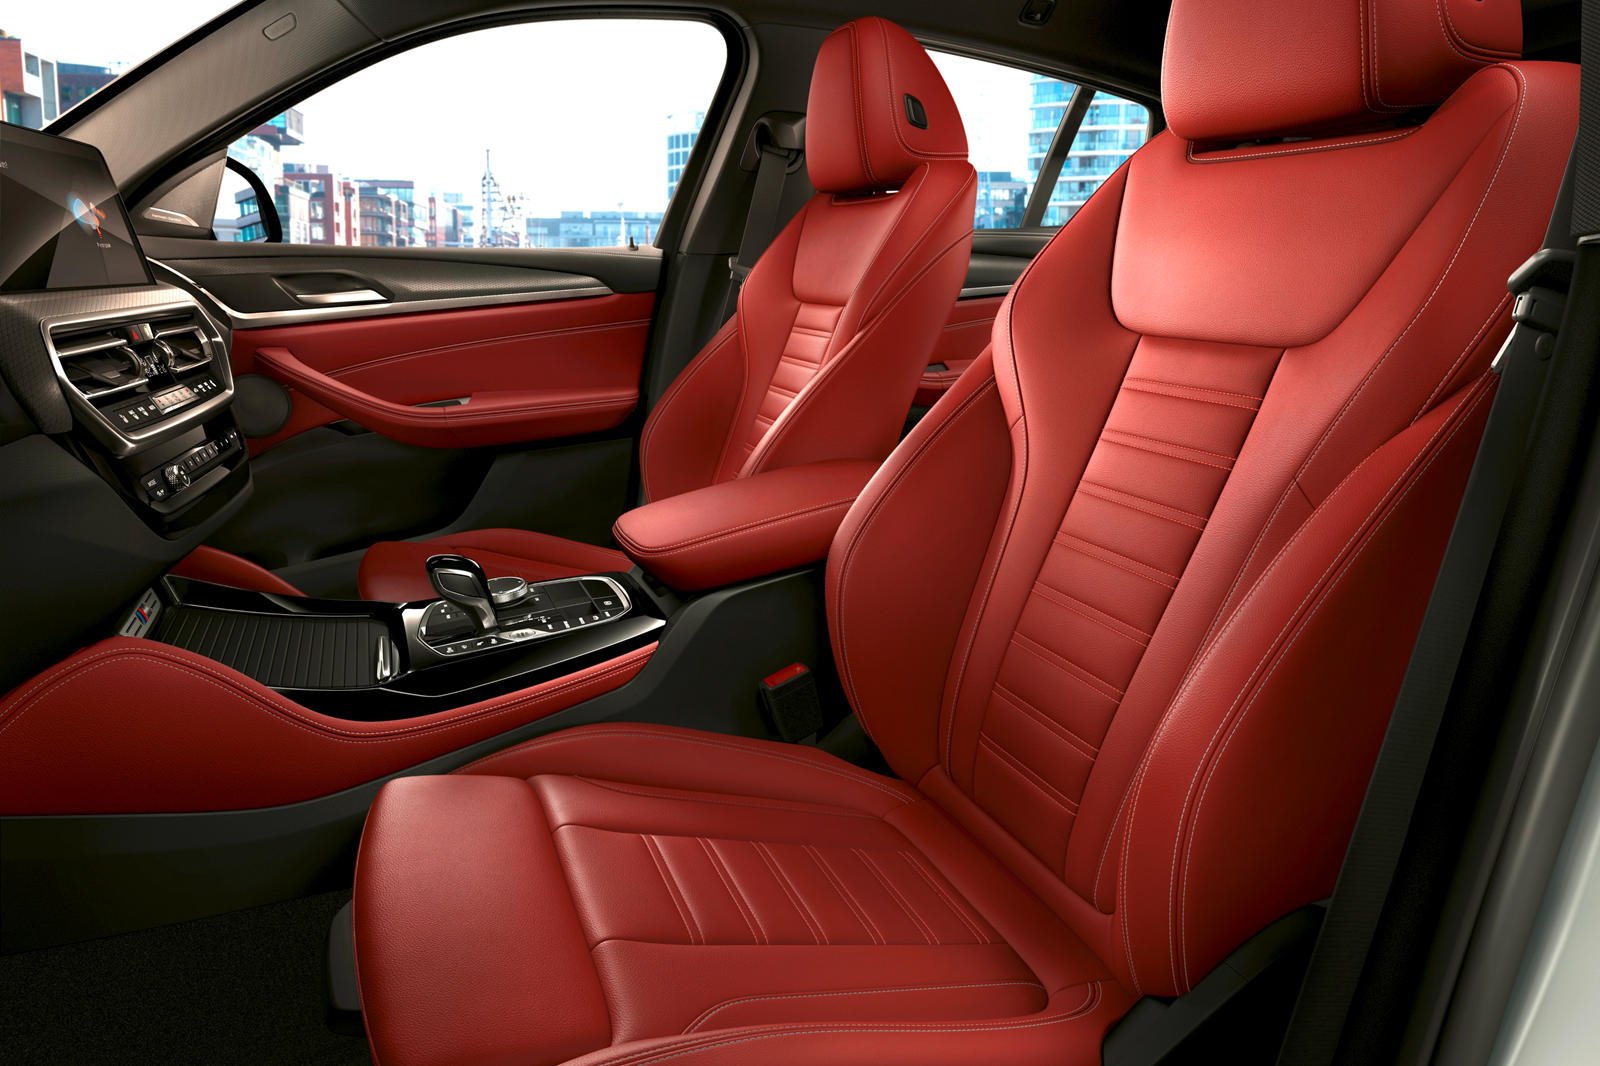 BMW X4 interior - Seats